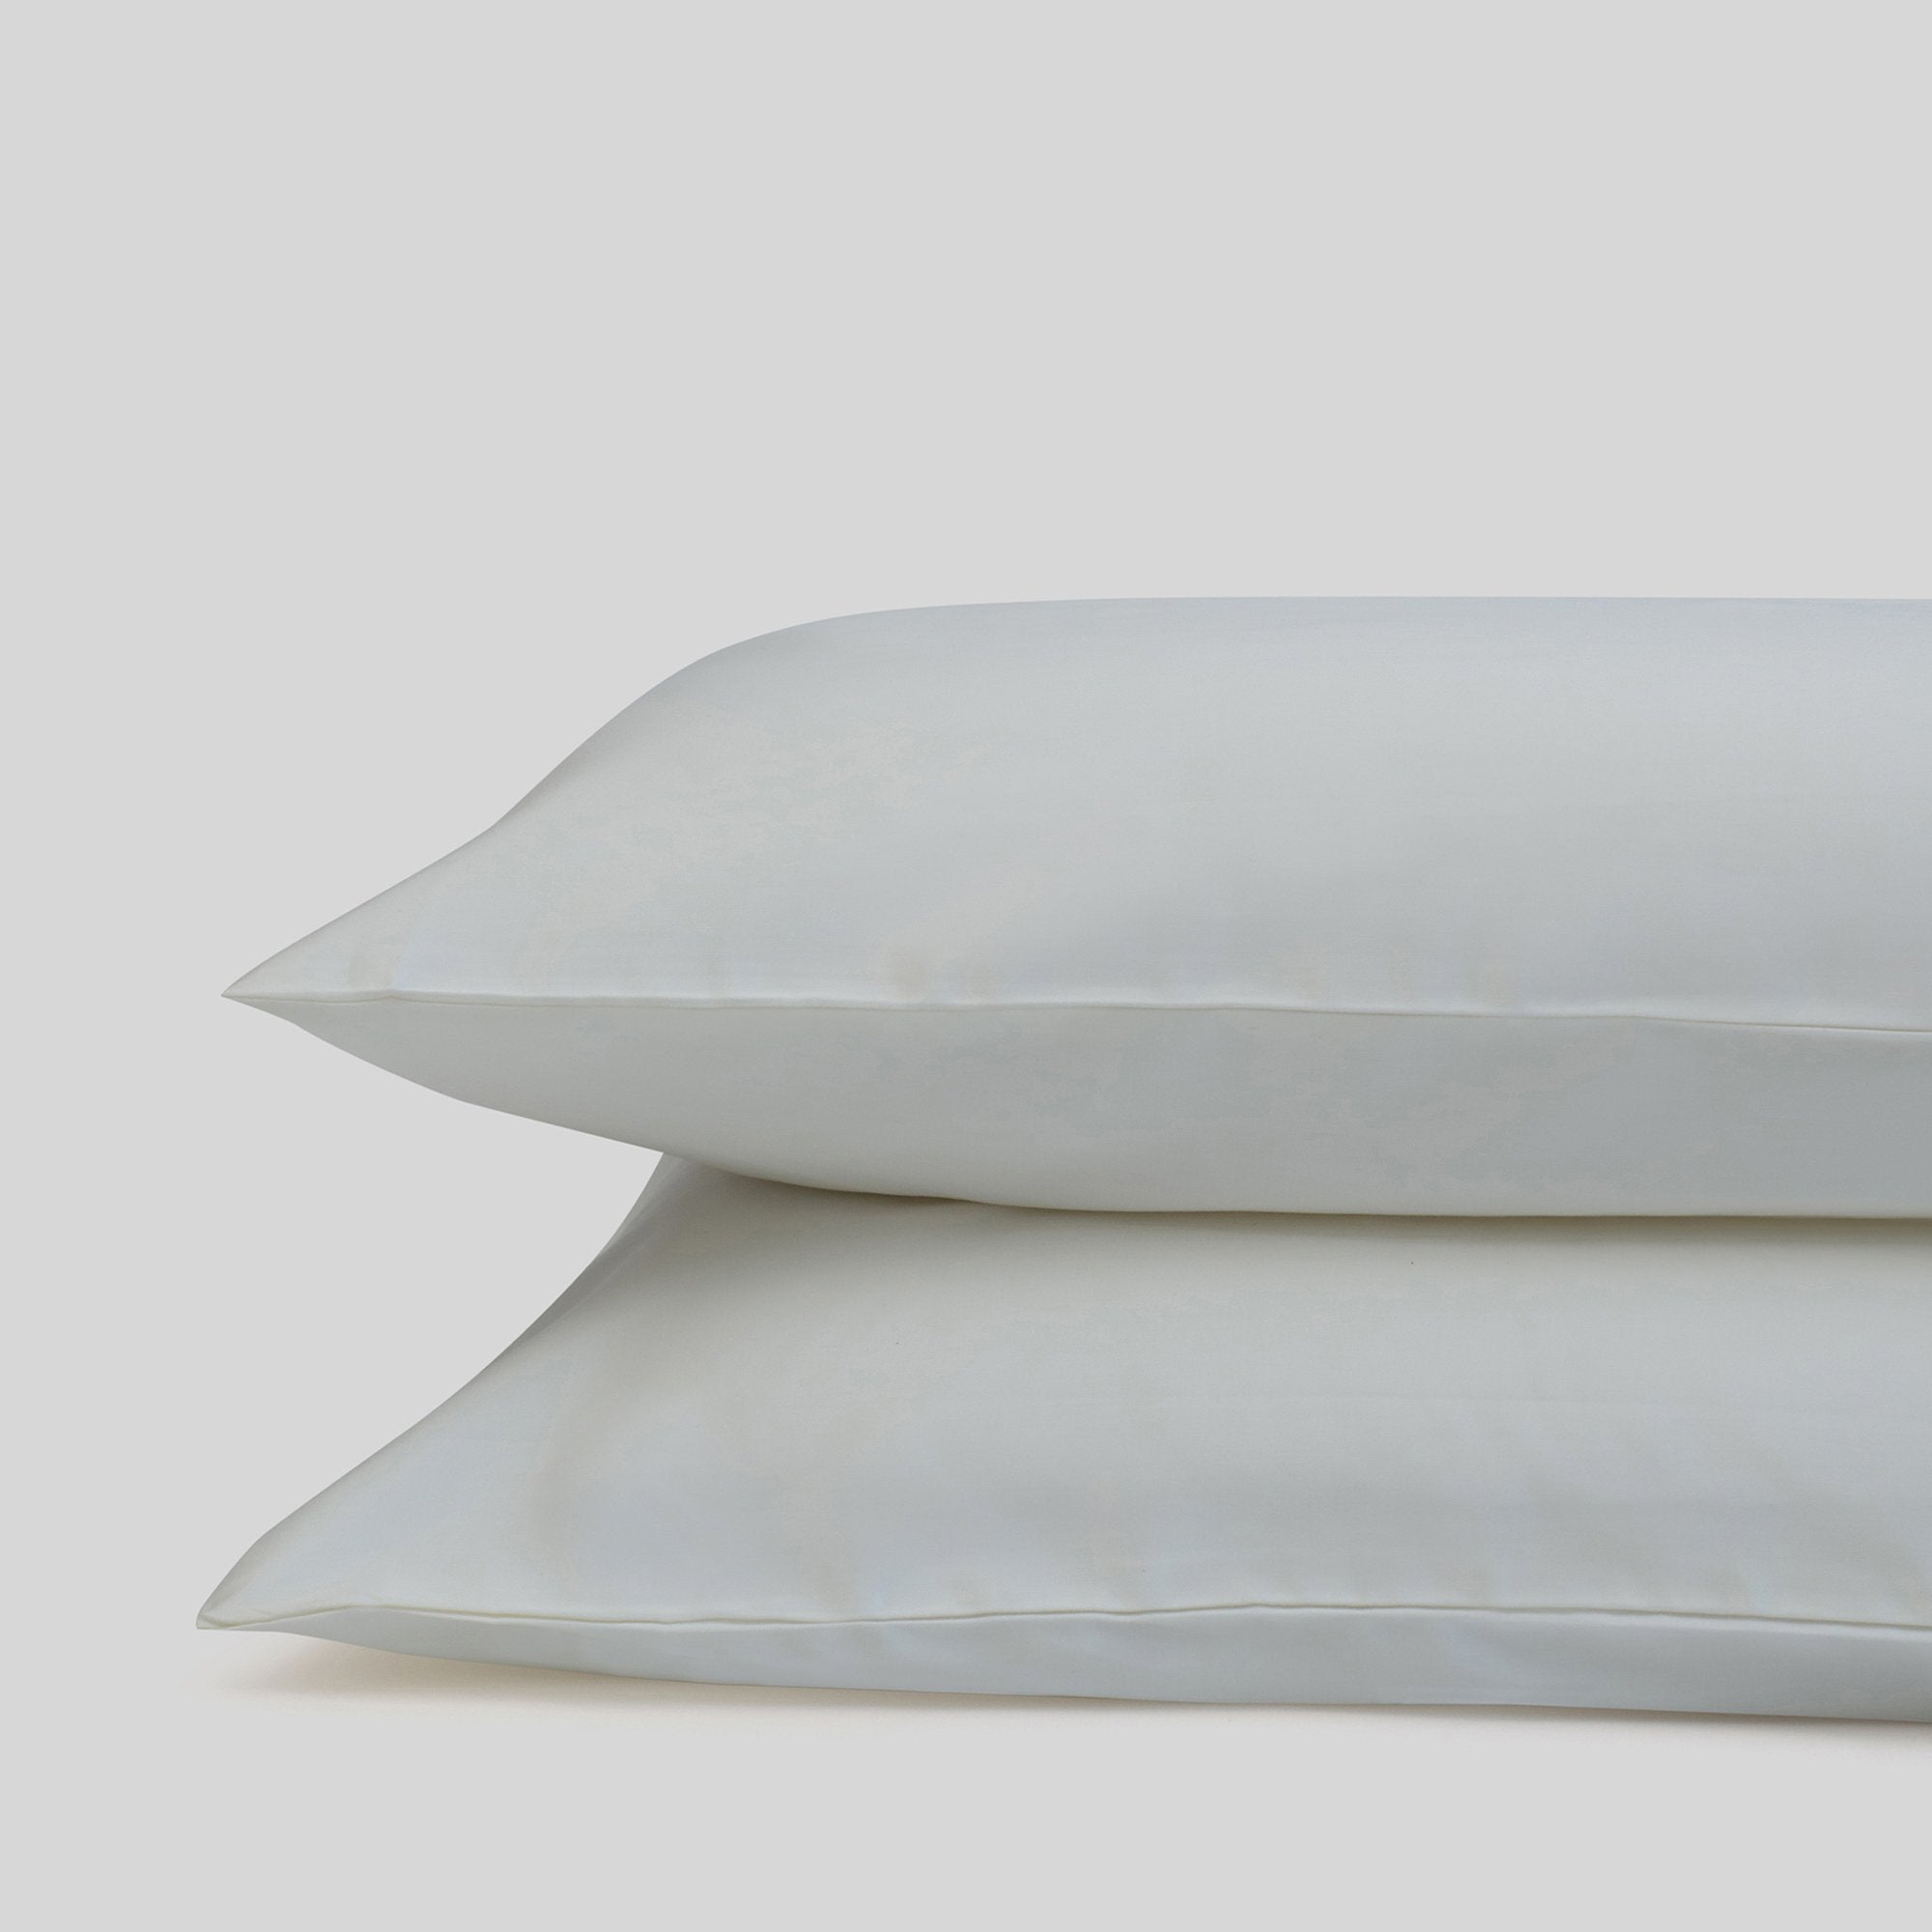 100% Organic Cotton Percale Pillowcase Set